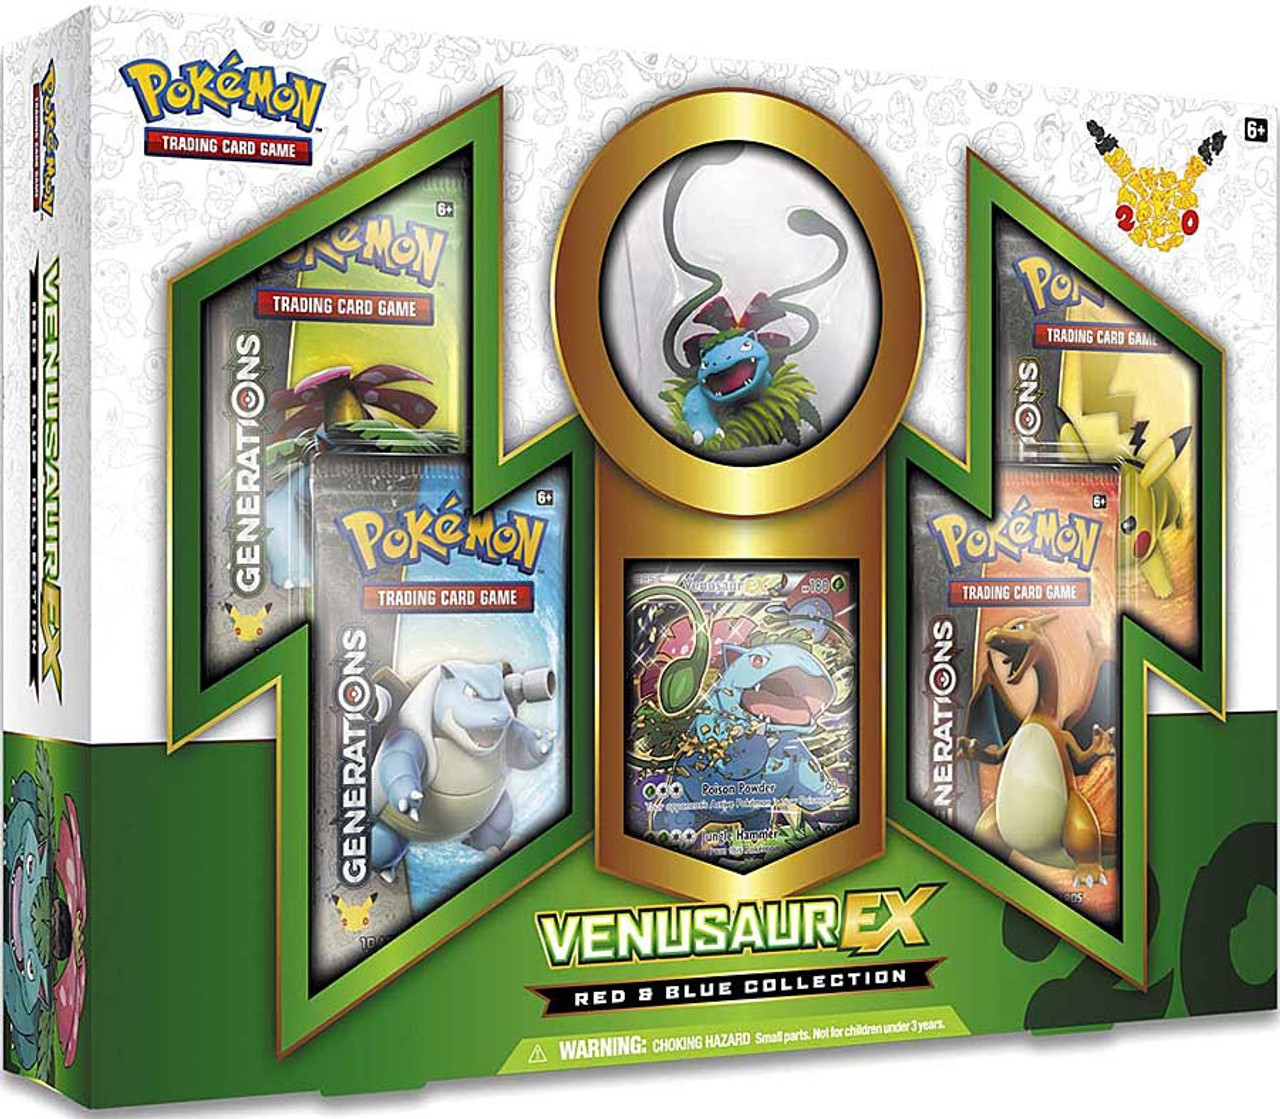 Pokemon Trading Card Game Red Blue Collection Venusaur Ex Box